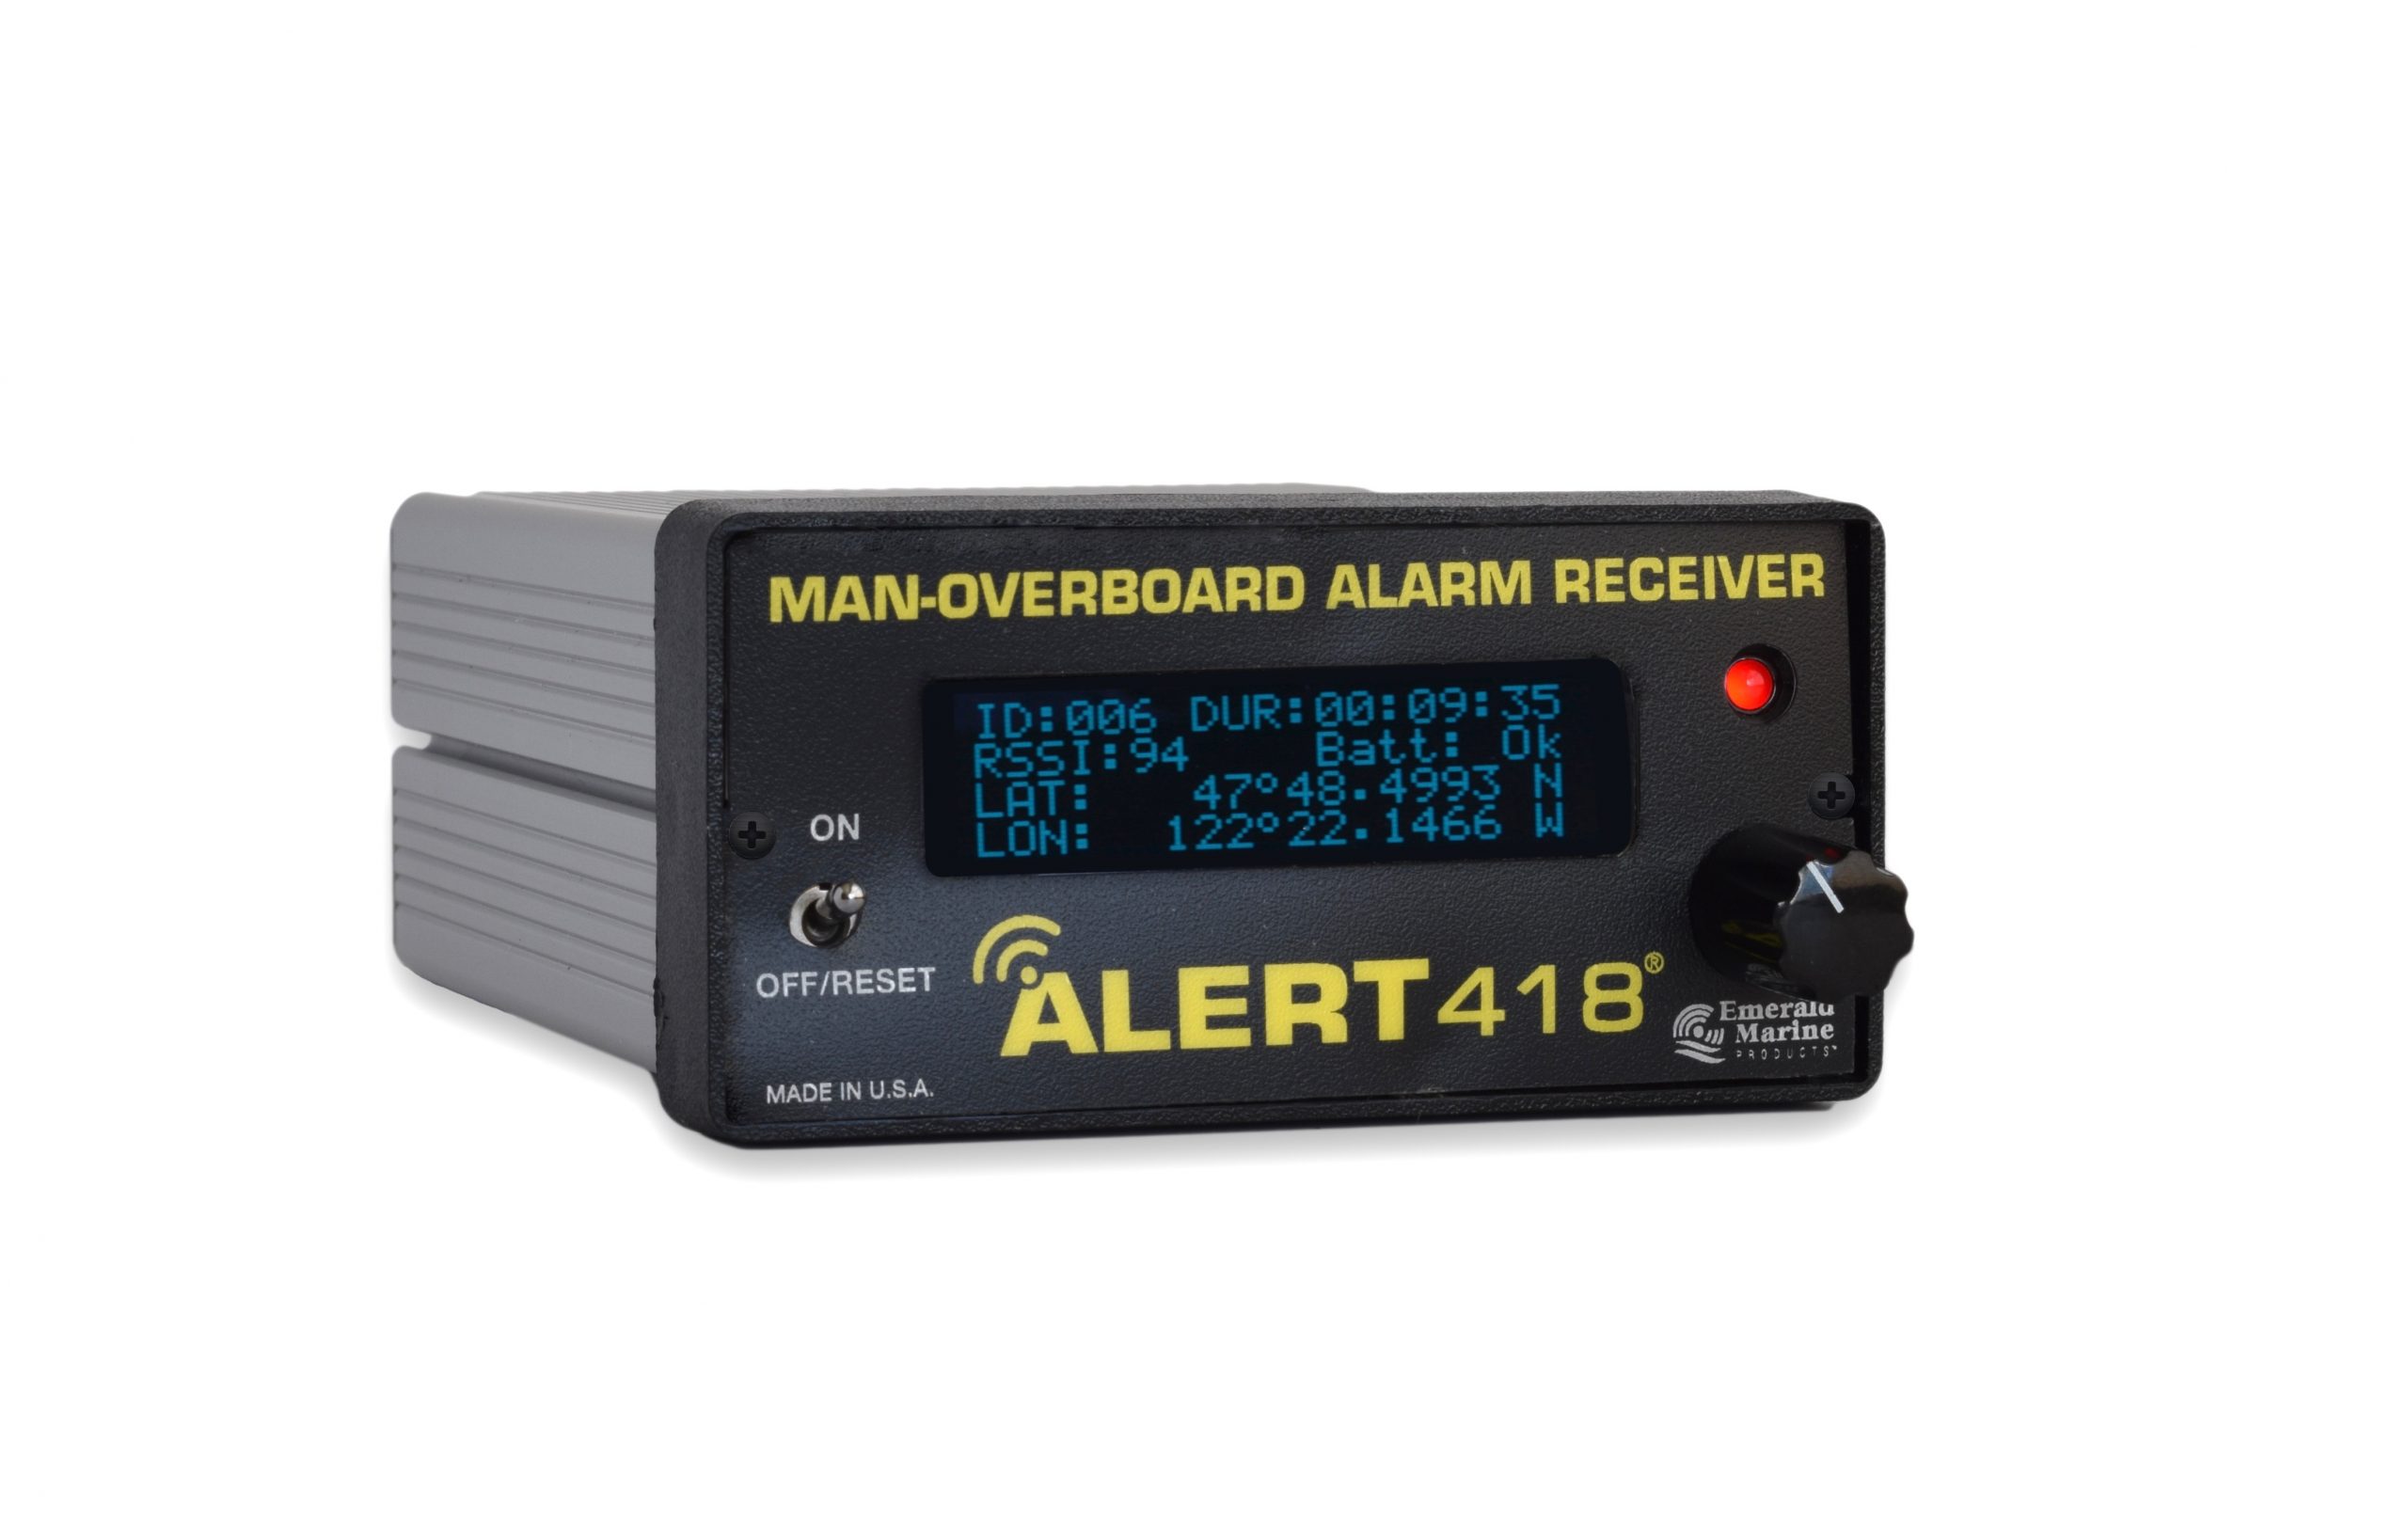 ALERT418® Overboard Receiver, Man Overboard Alarm